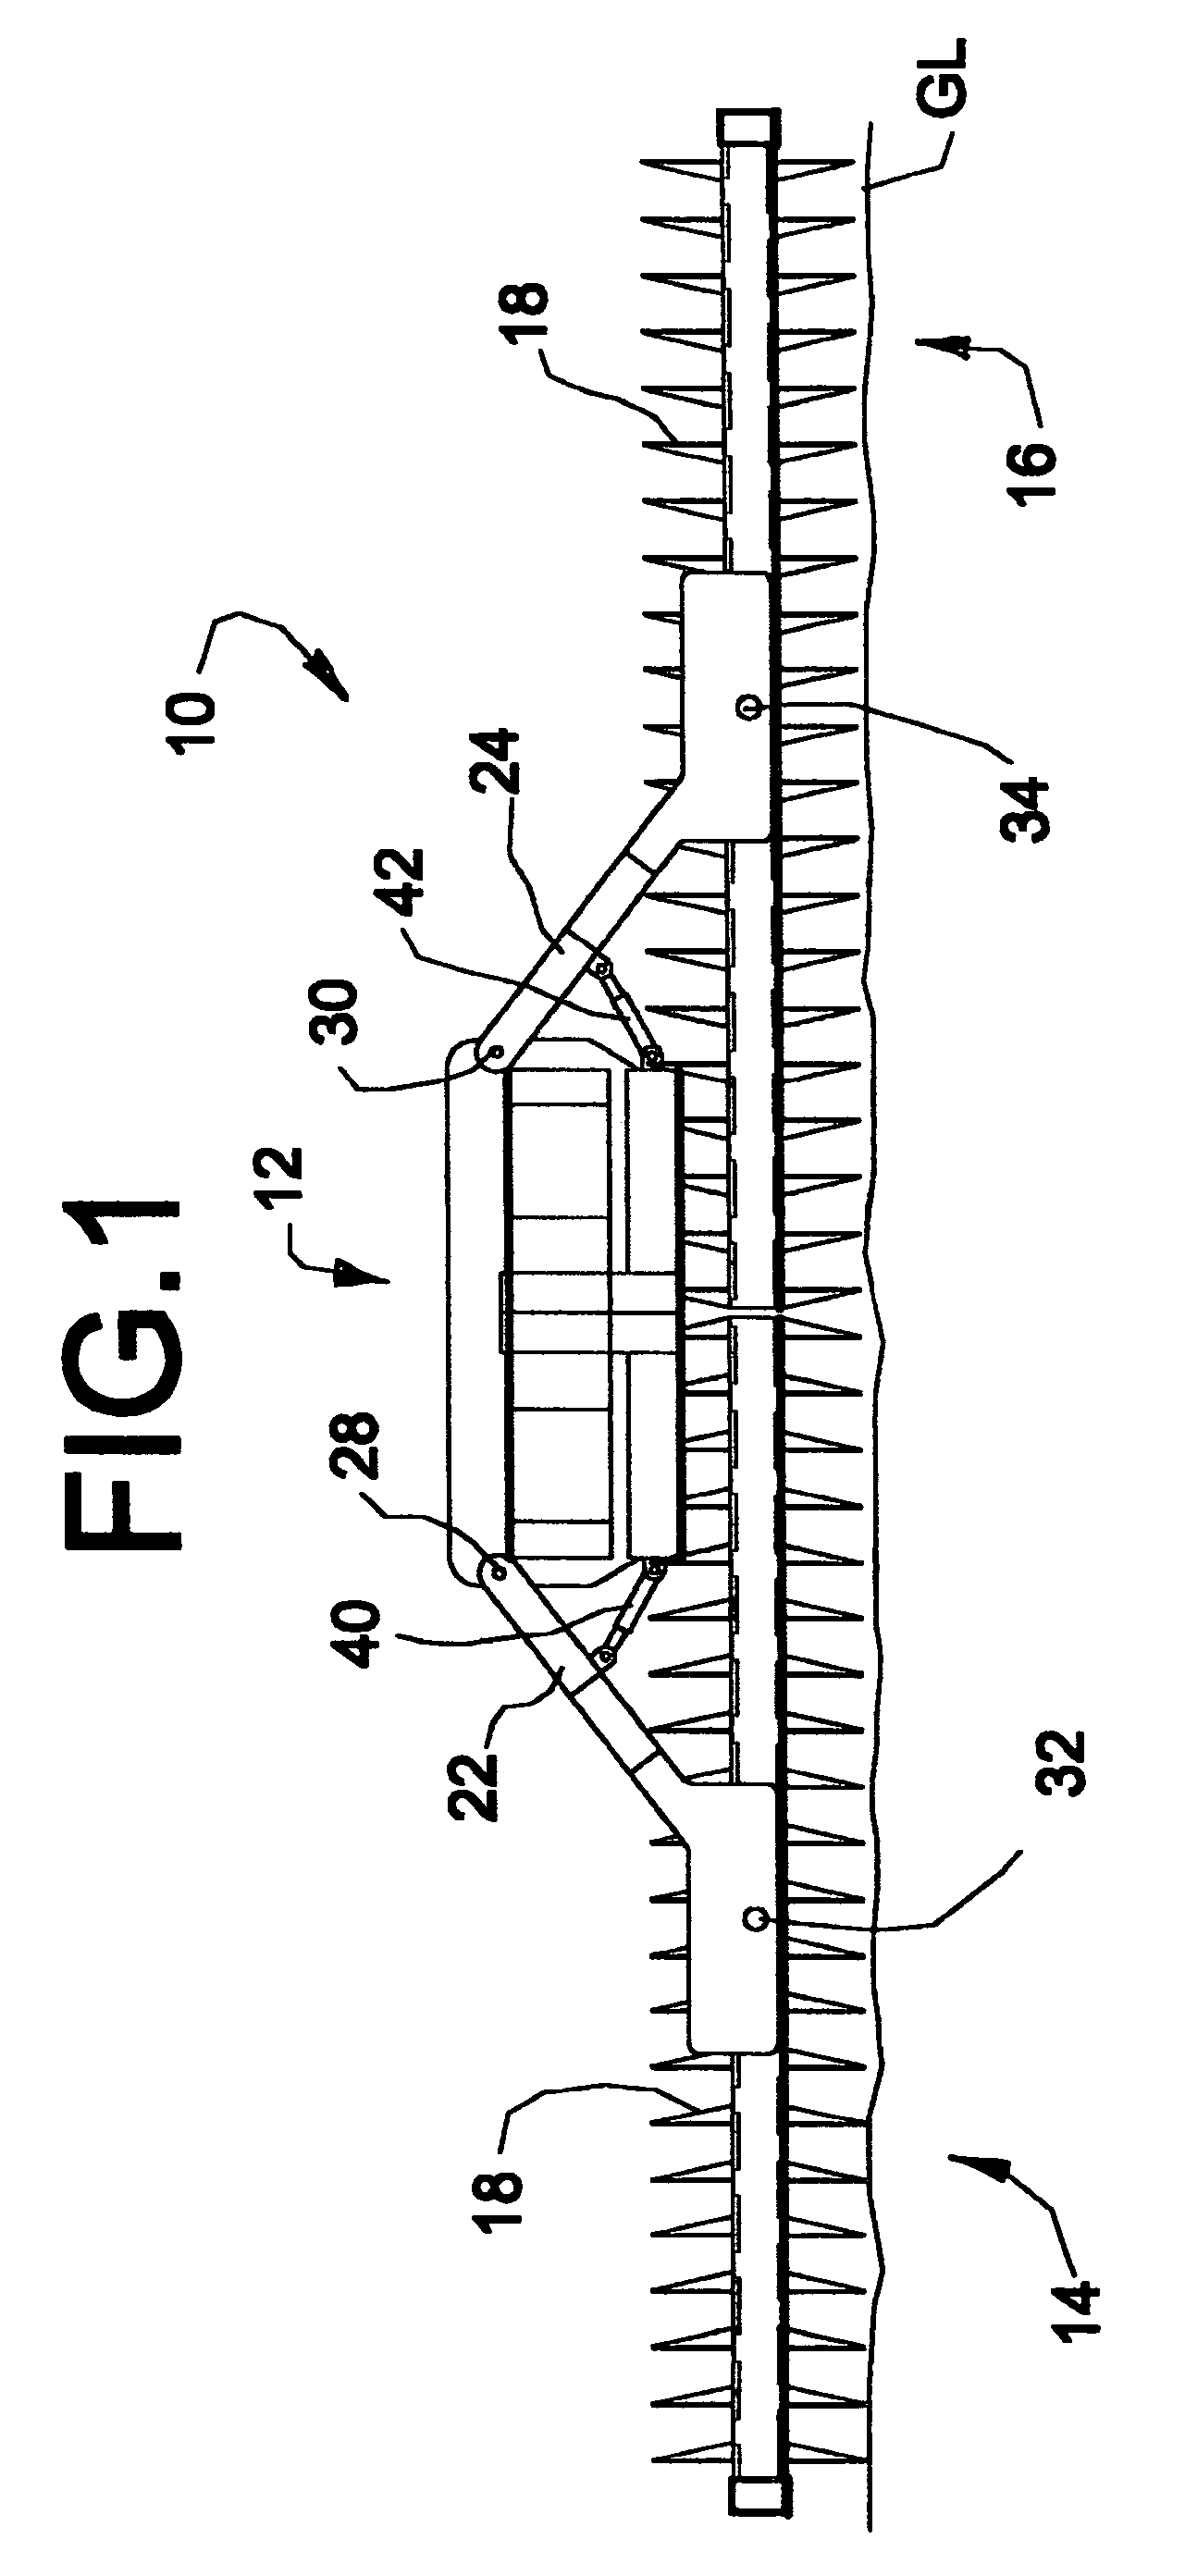 Center pivot wing flotation method and apparatus